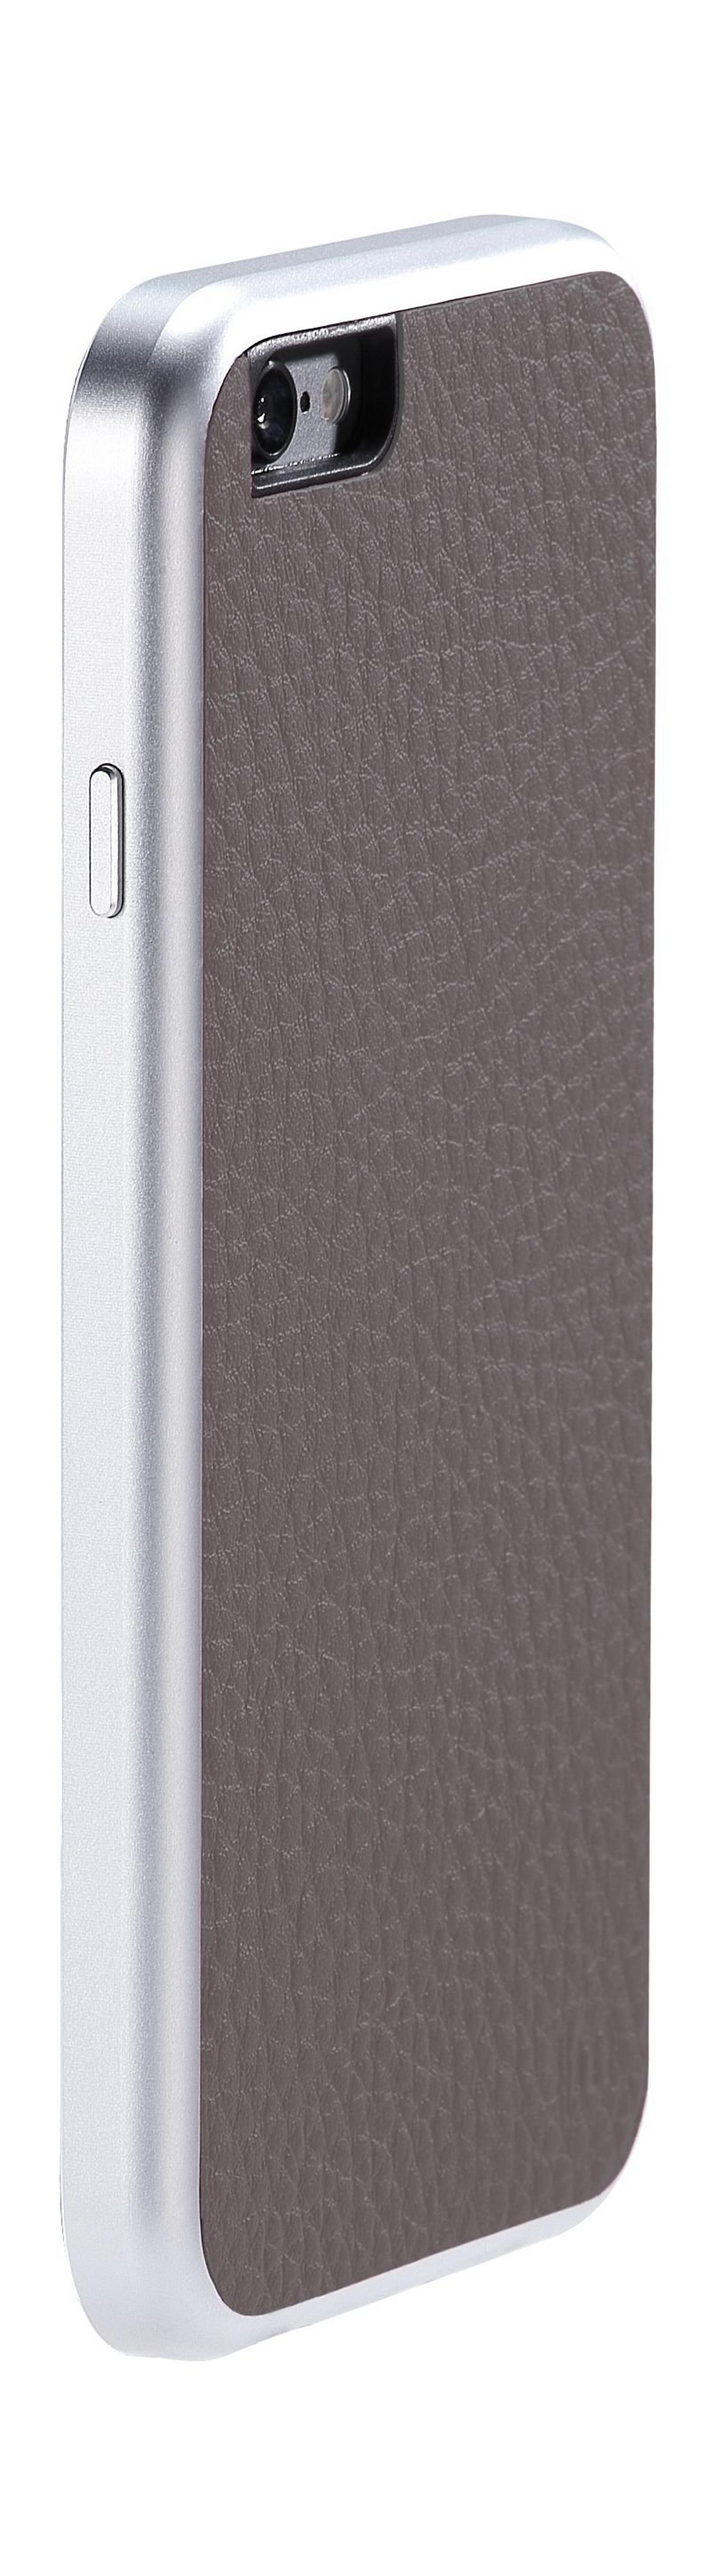 Just Mobile Aluframe Protective Leather Case for iPhone 6 (AF-168) – Grey